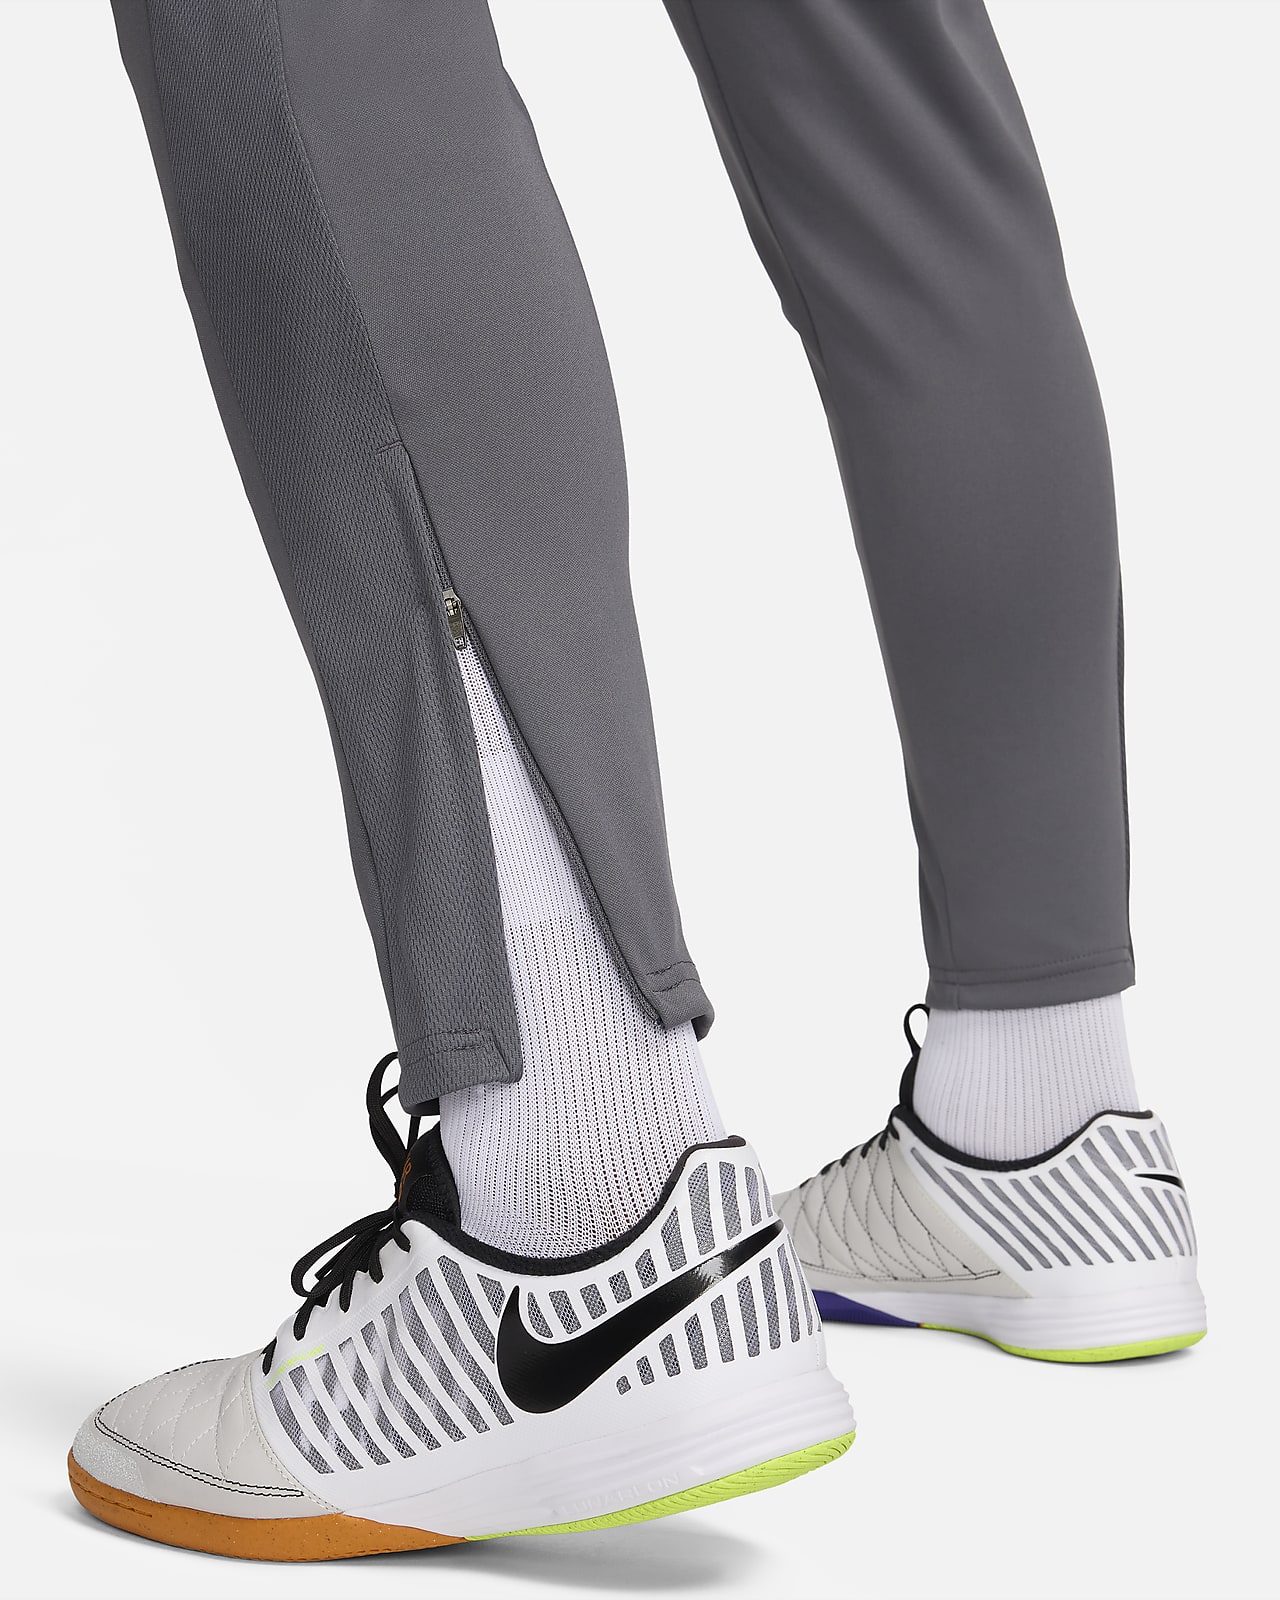 Nike Academy 21 W CV2665-010 Trousers (L)